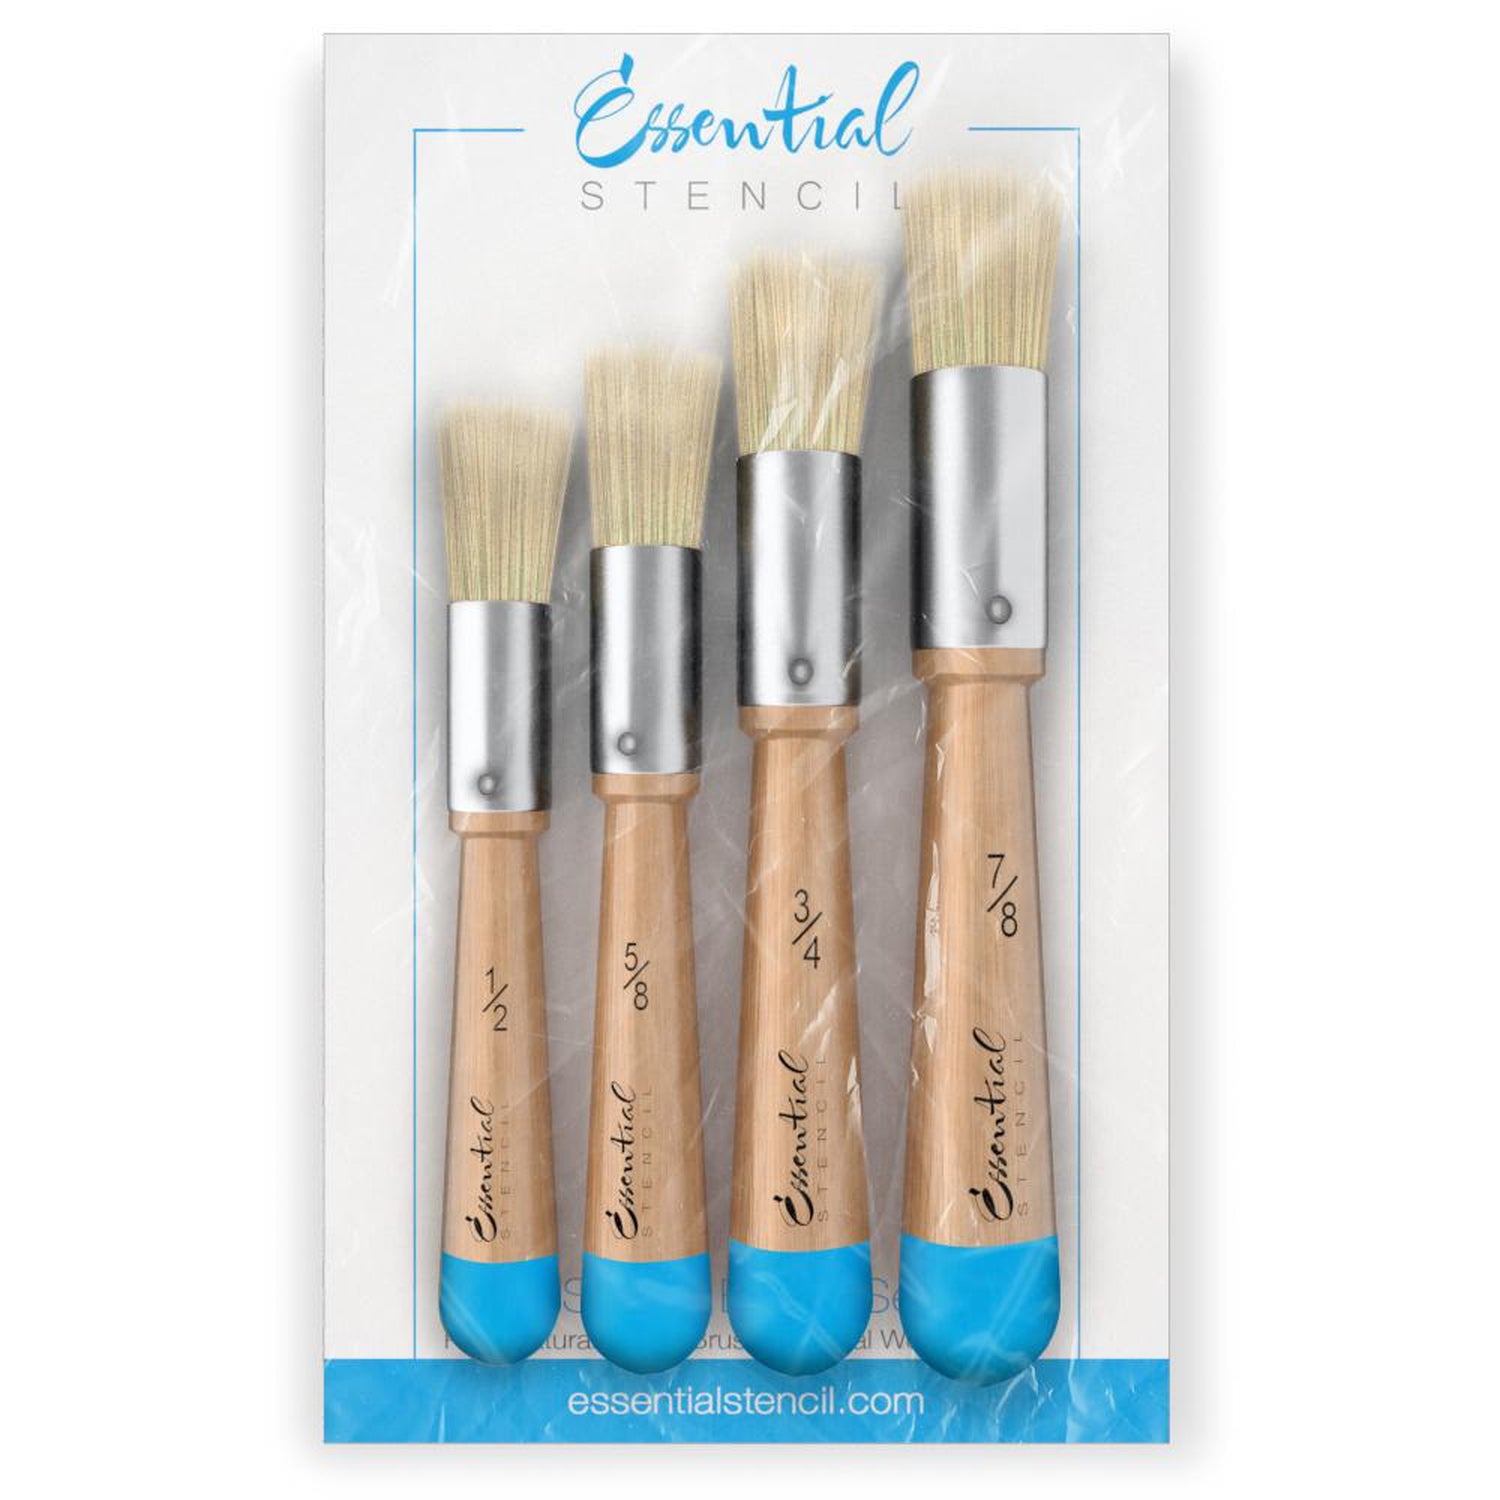 Best Selling Pure Bristle Stencil Brush Set - Essential Stencil